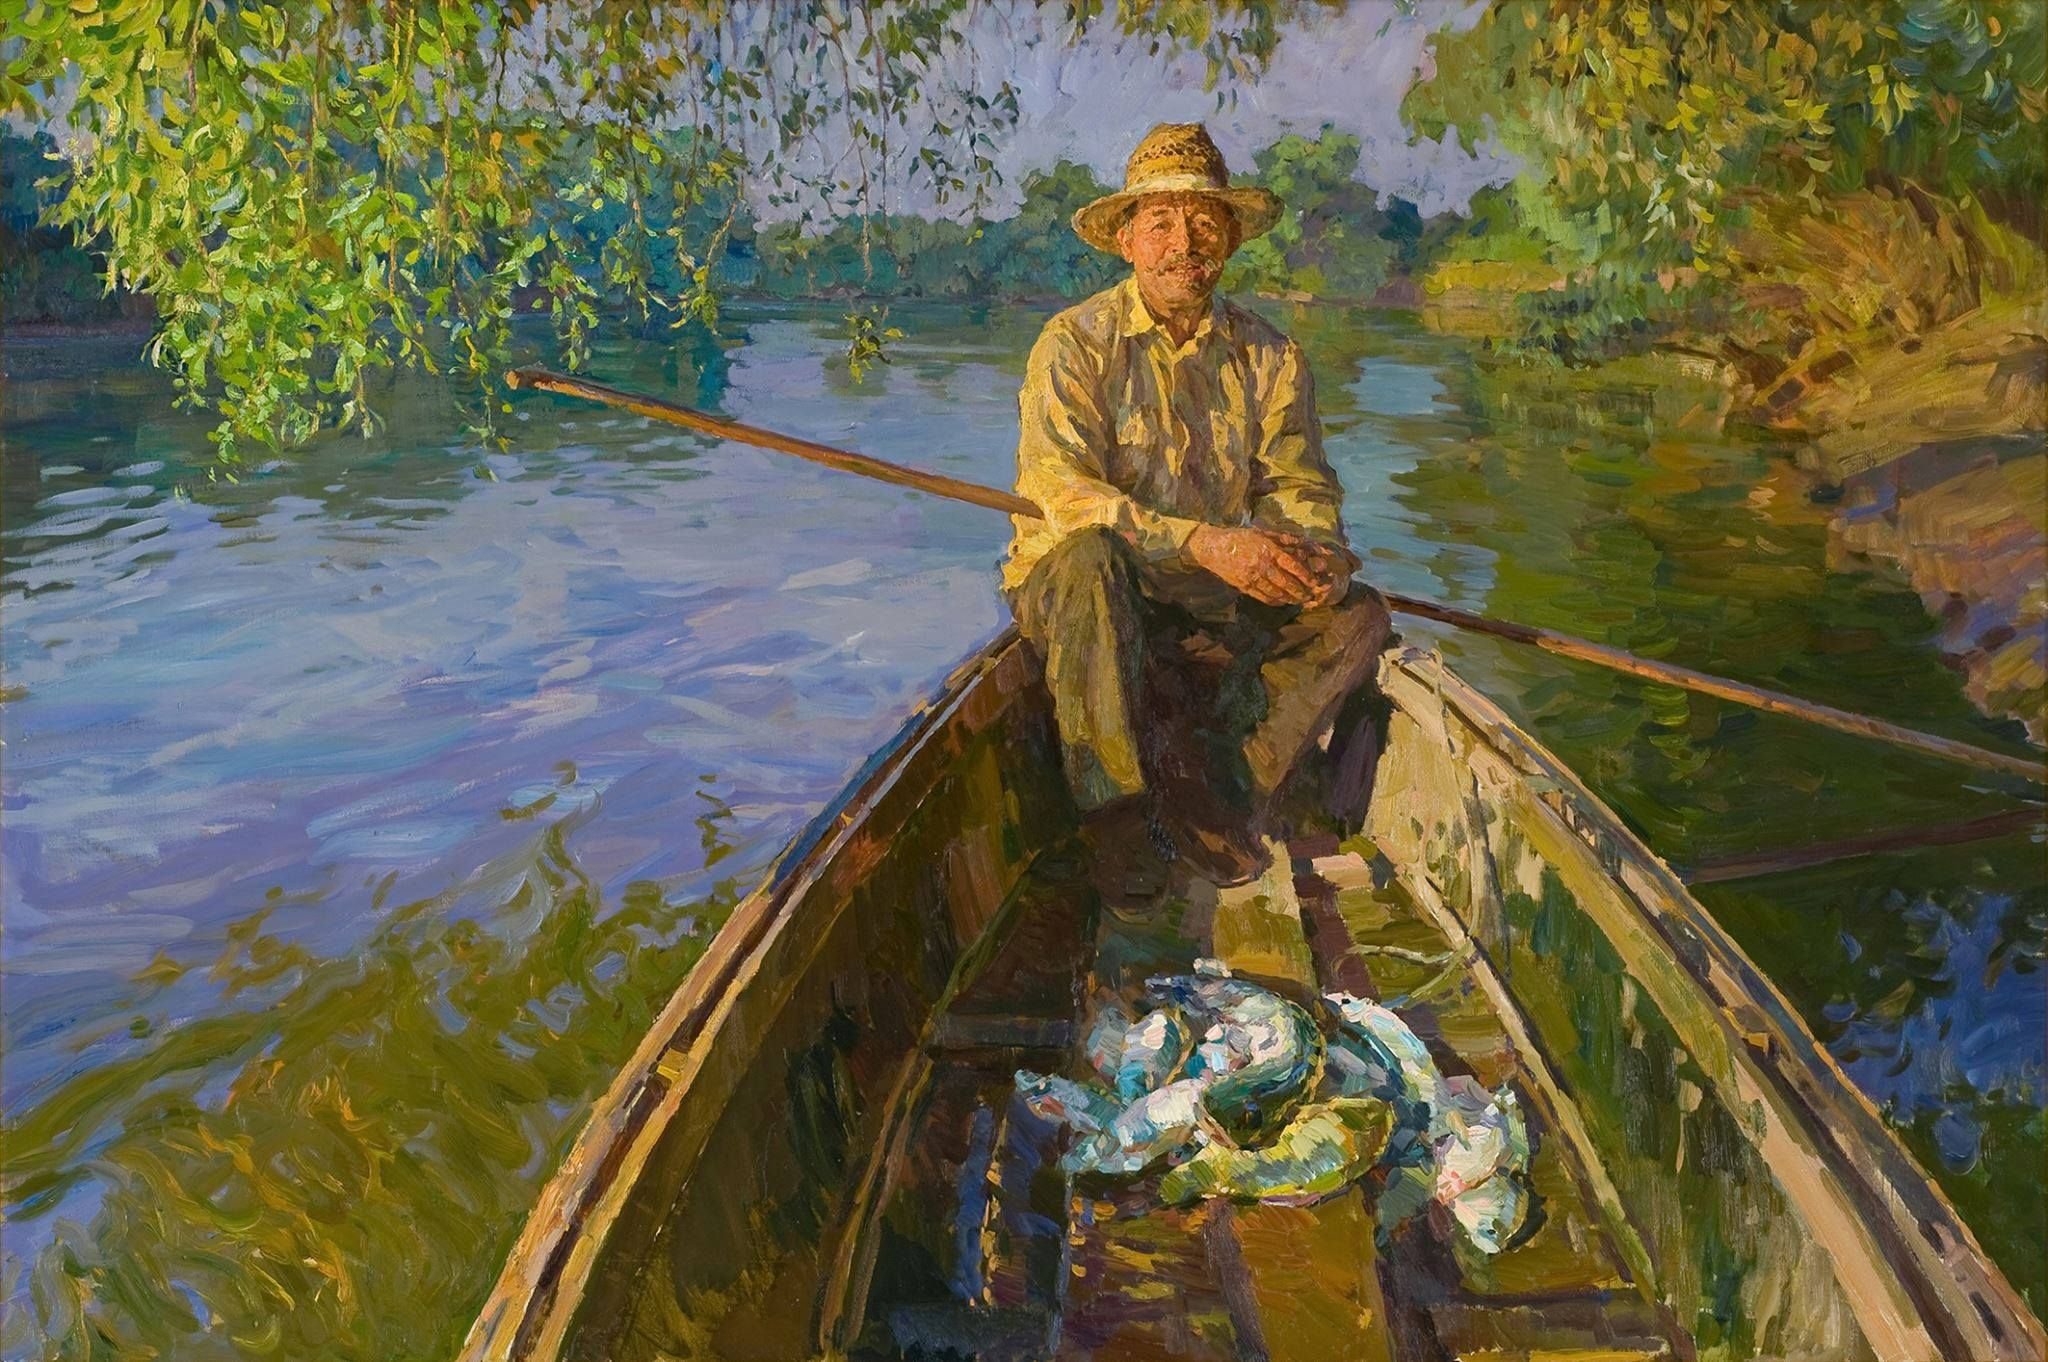 Картина рыболов